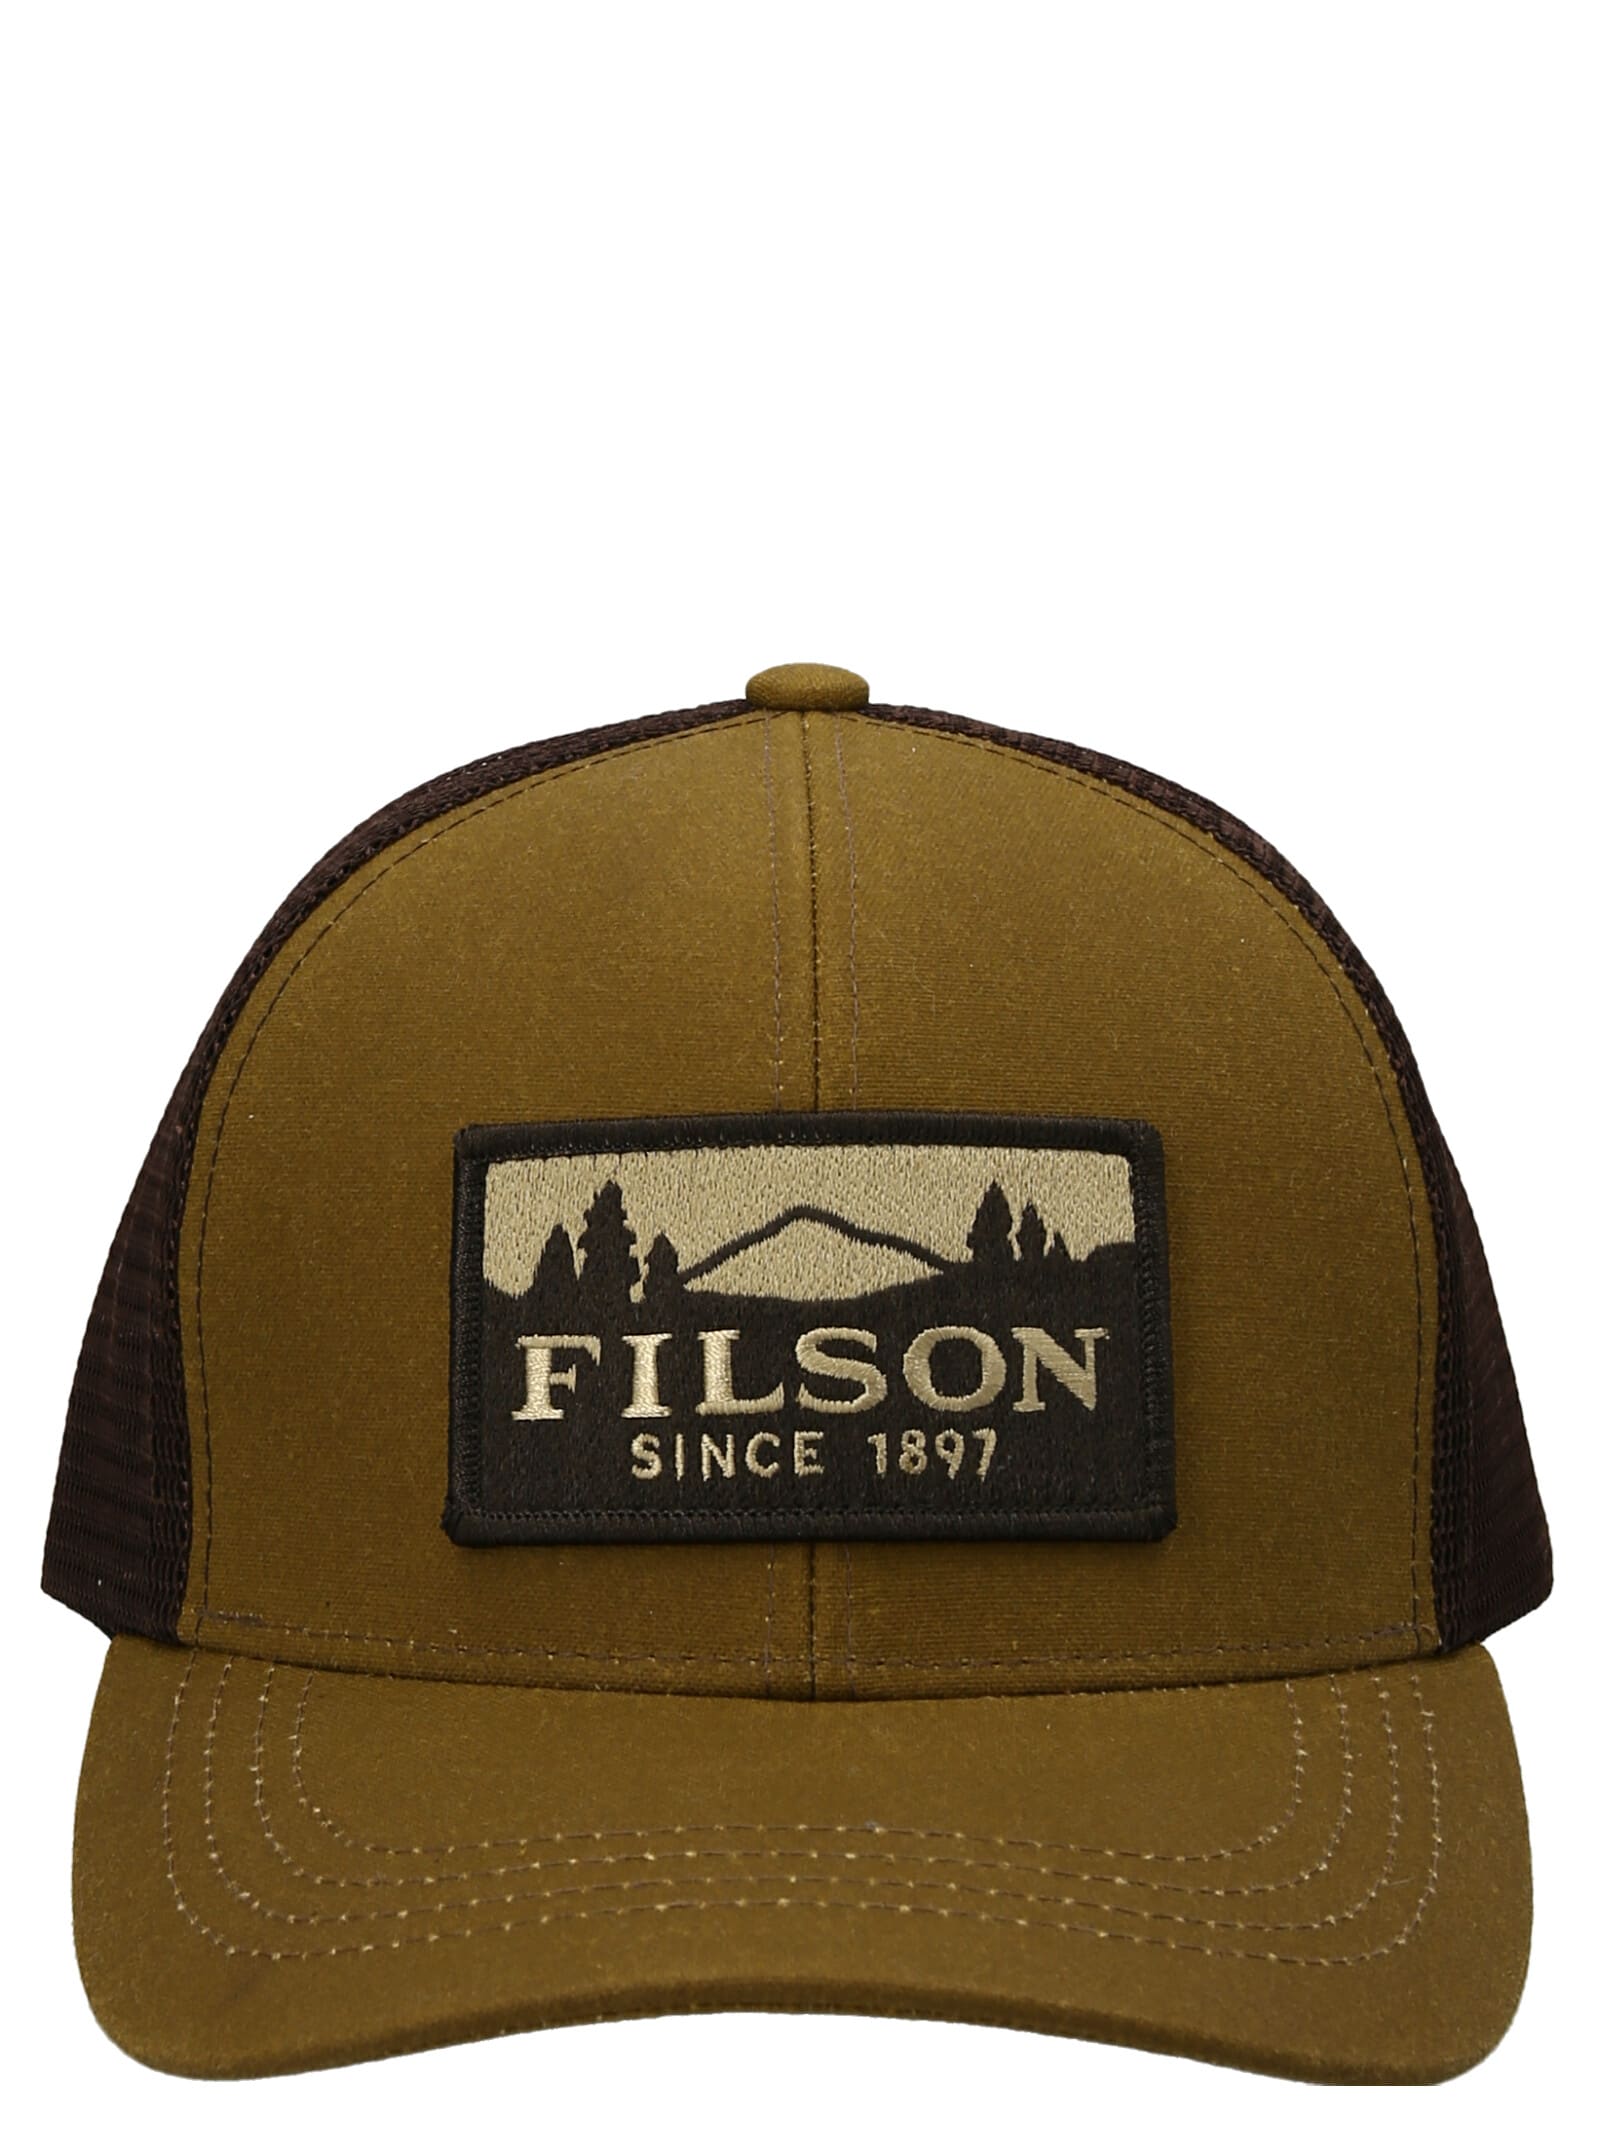 Filson trucker Cap